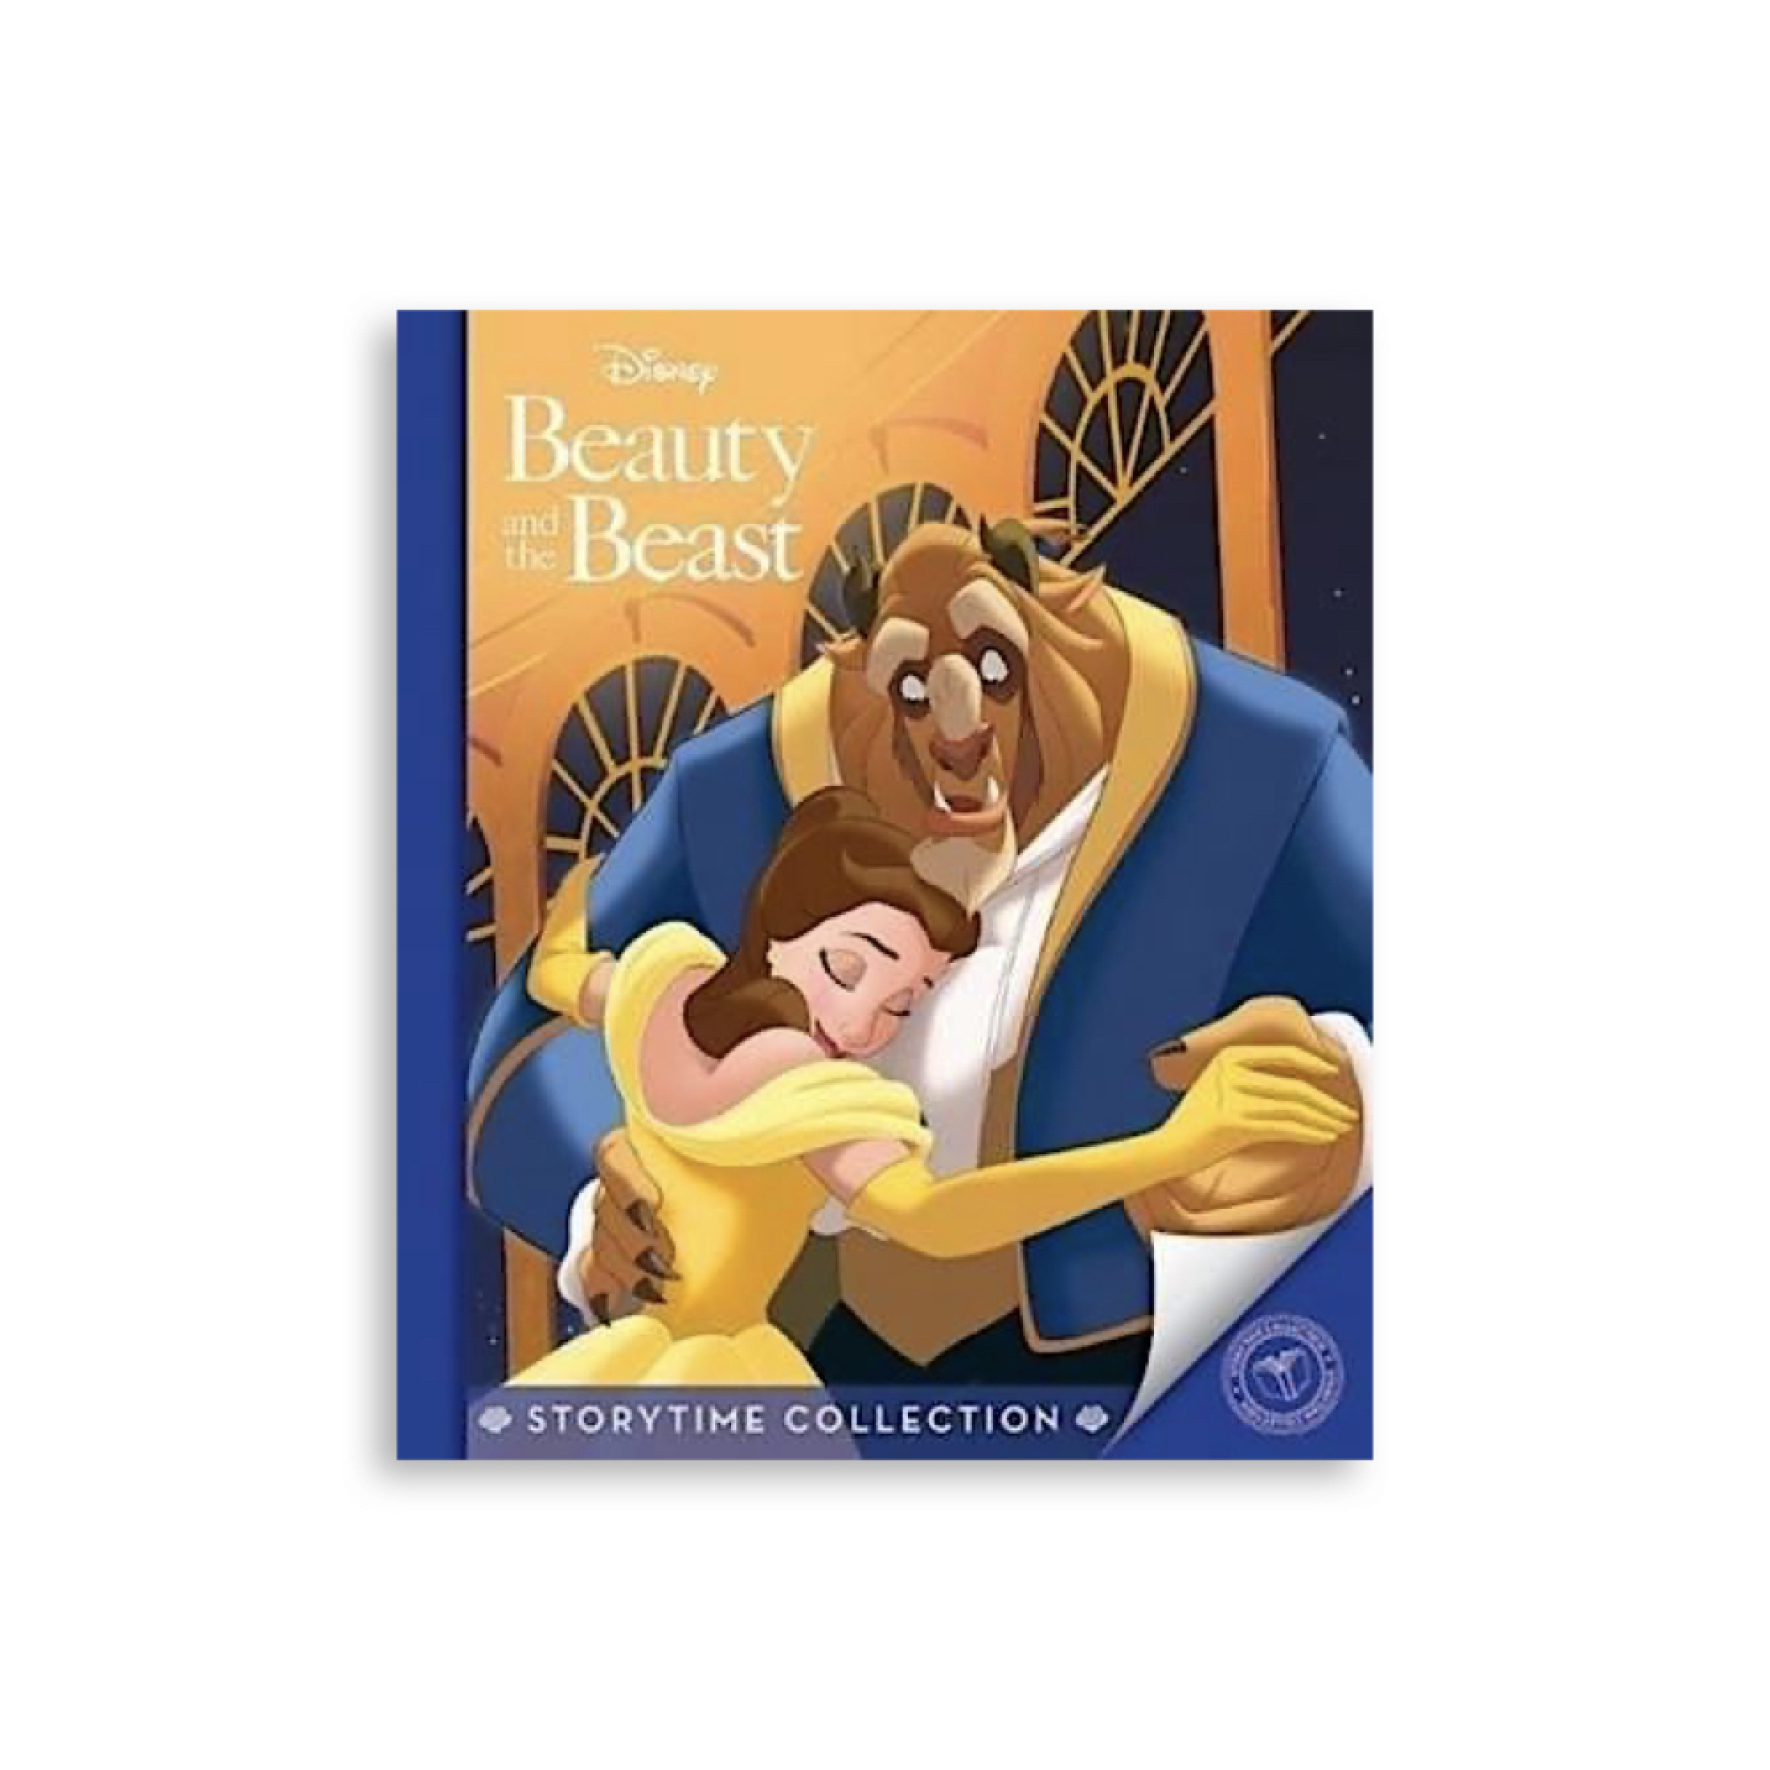  کتاب دیو و دلبر Storytime Collection Beauty and the Beast 